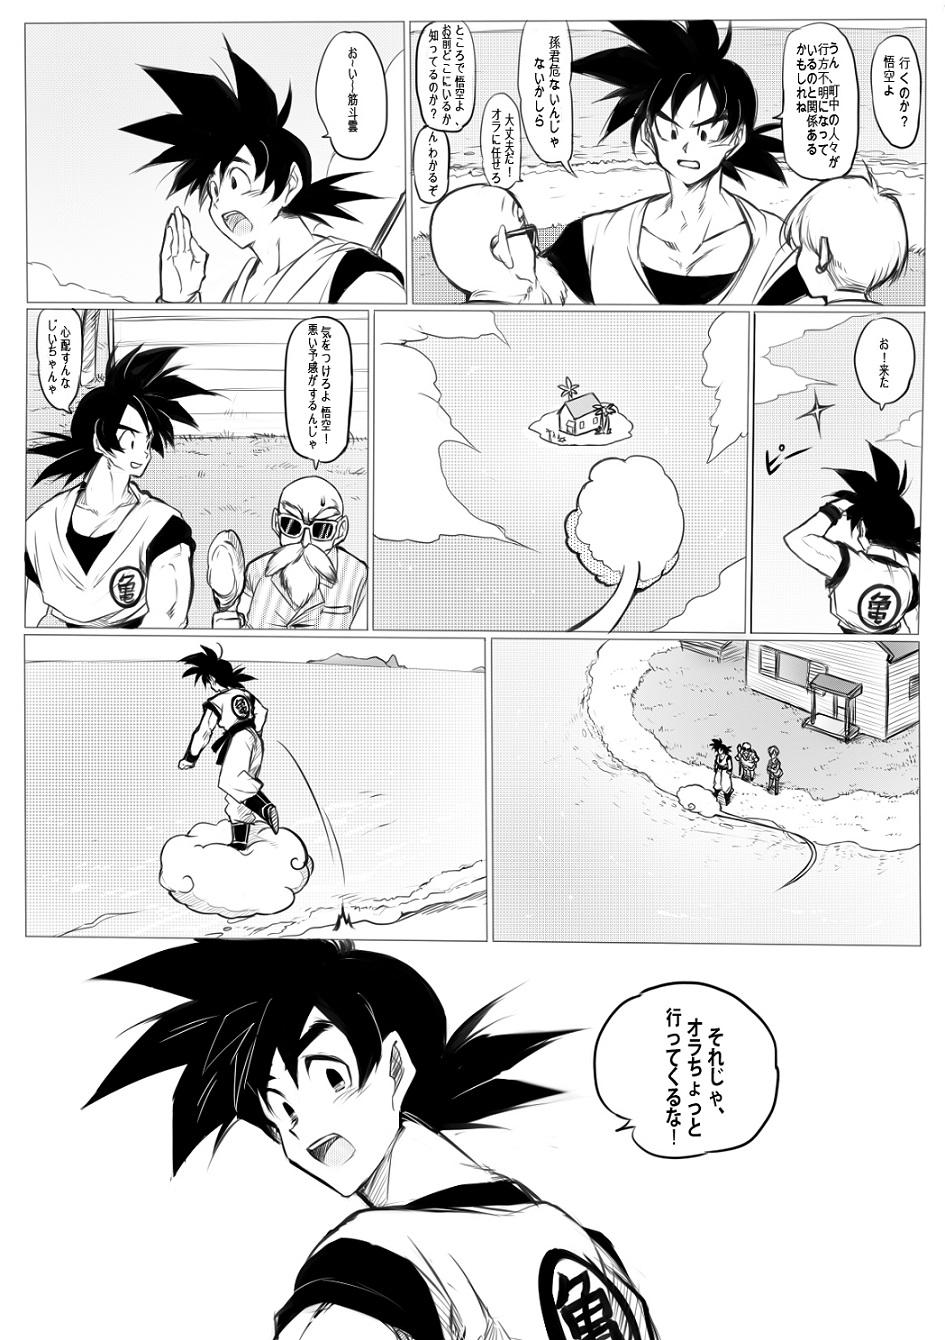 Nasty 接触 - Dragon ball z Perfect Body Porn - Page 2